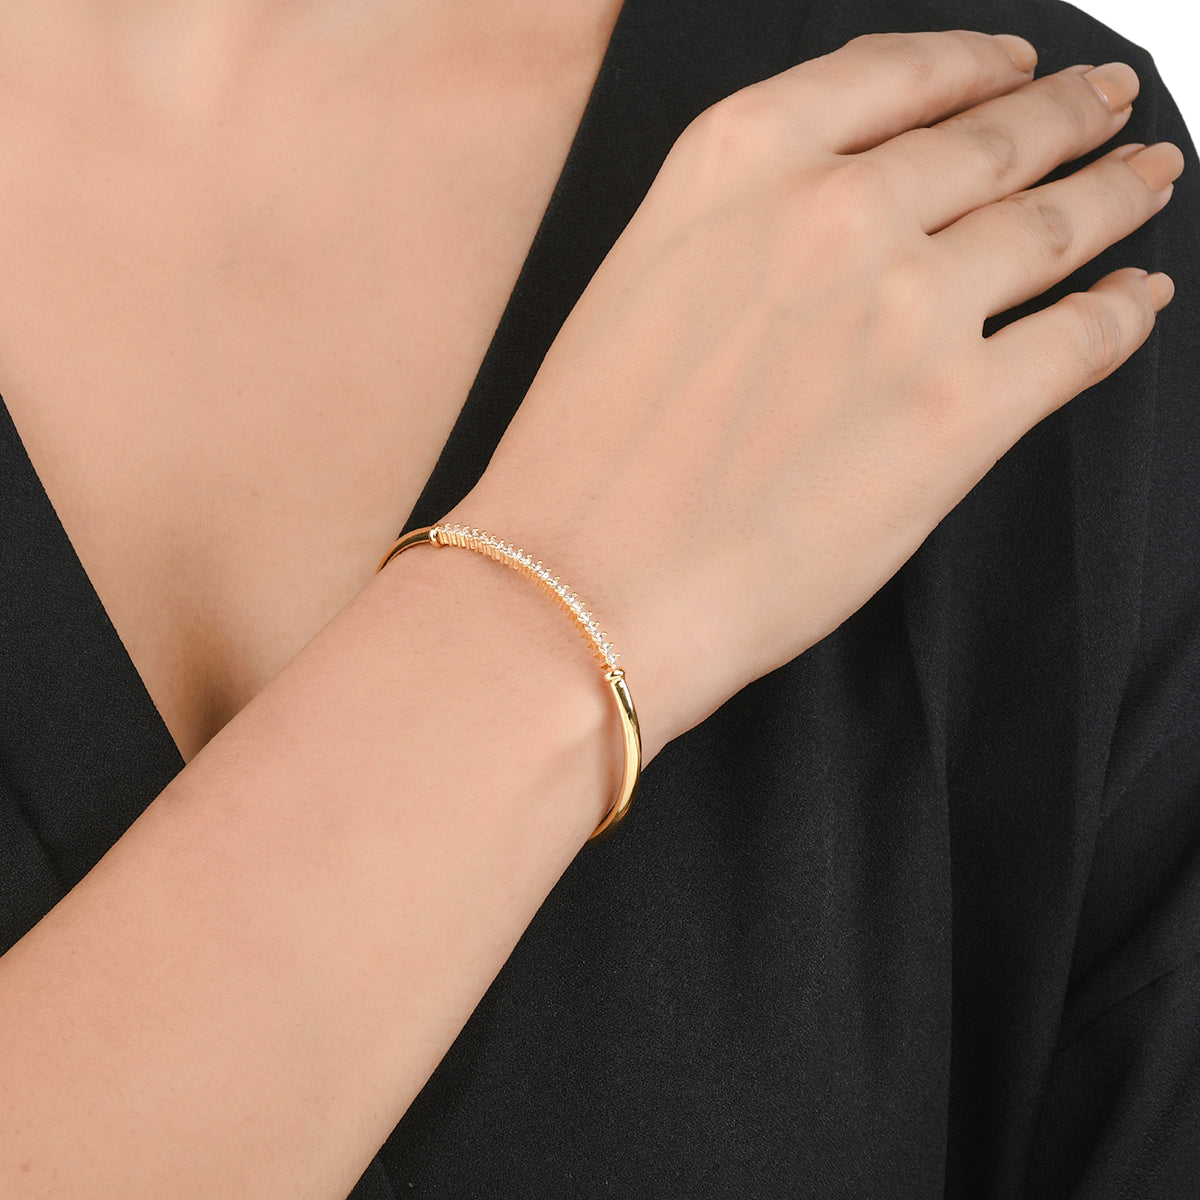 Buy Voylla Strand Bracelet for Men (Golden)(8907617387154) at Amazon.in